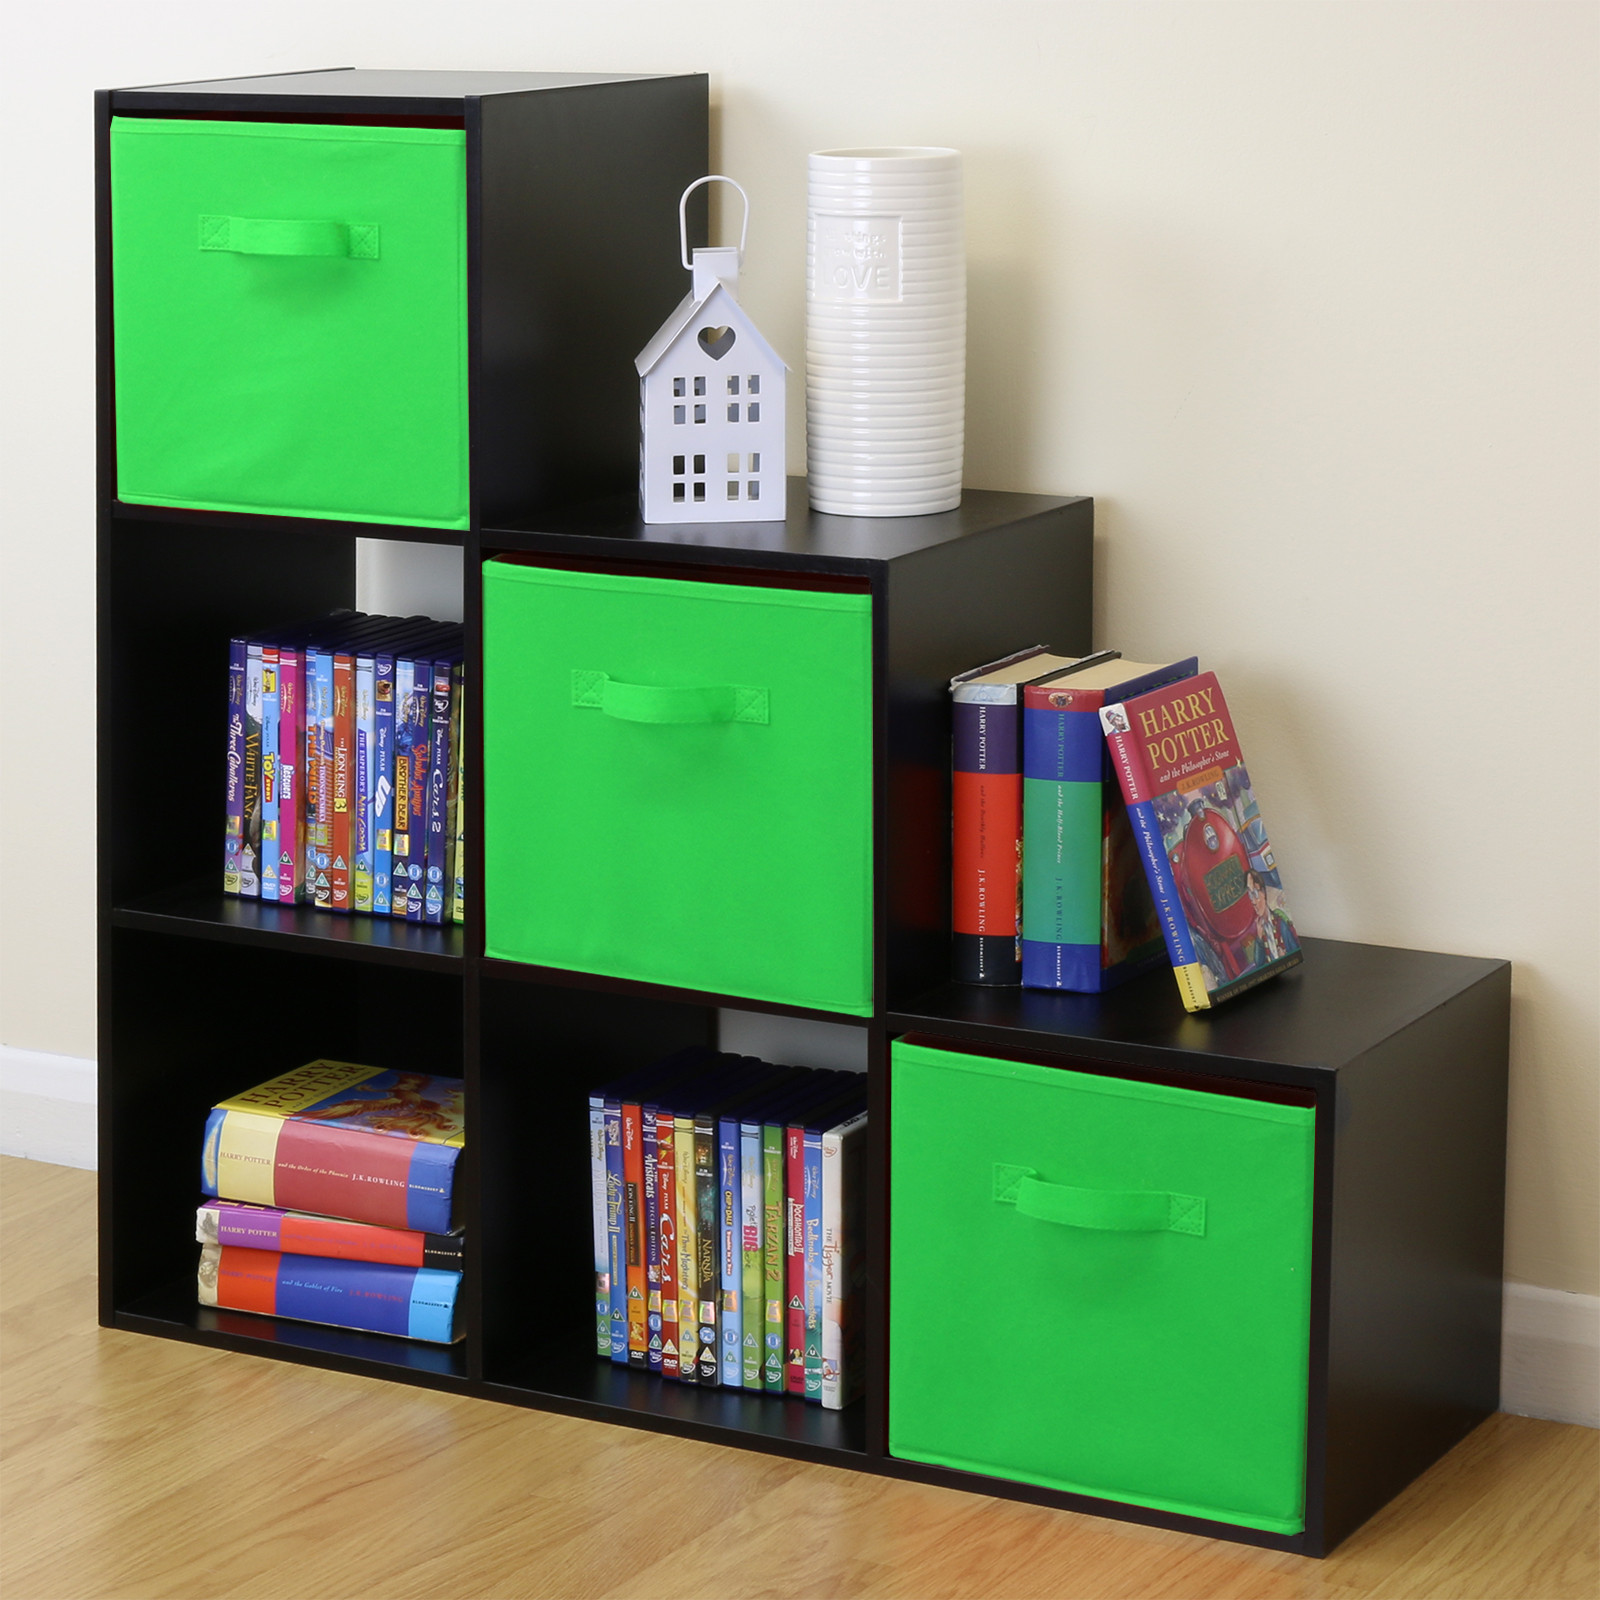 Storage Unit For Bedroom
 Black 6 Cube Kids Toy Games Storage Unit Girls Boys